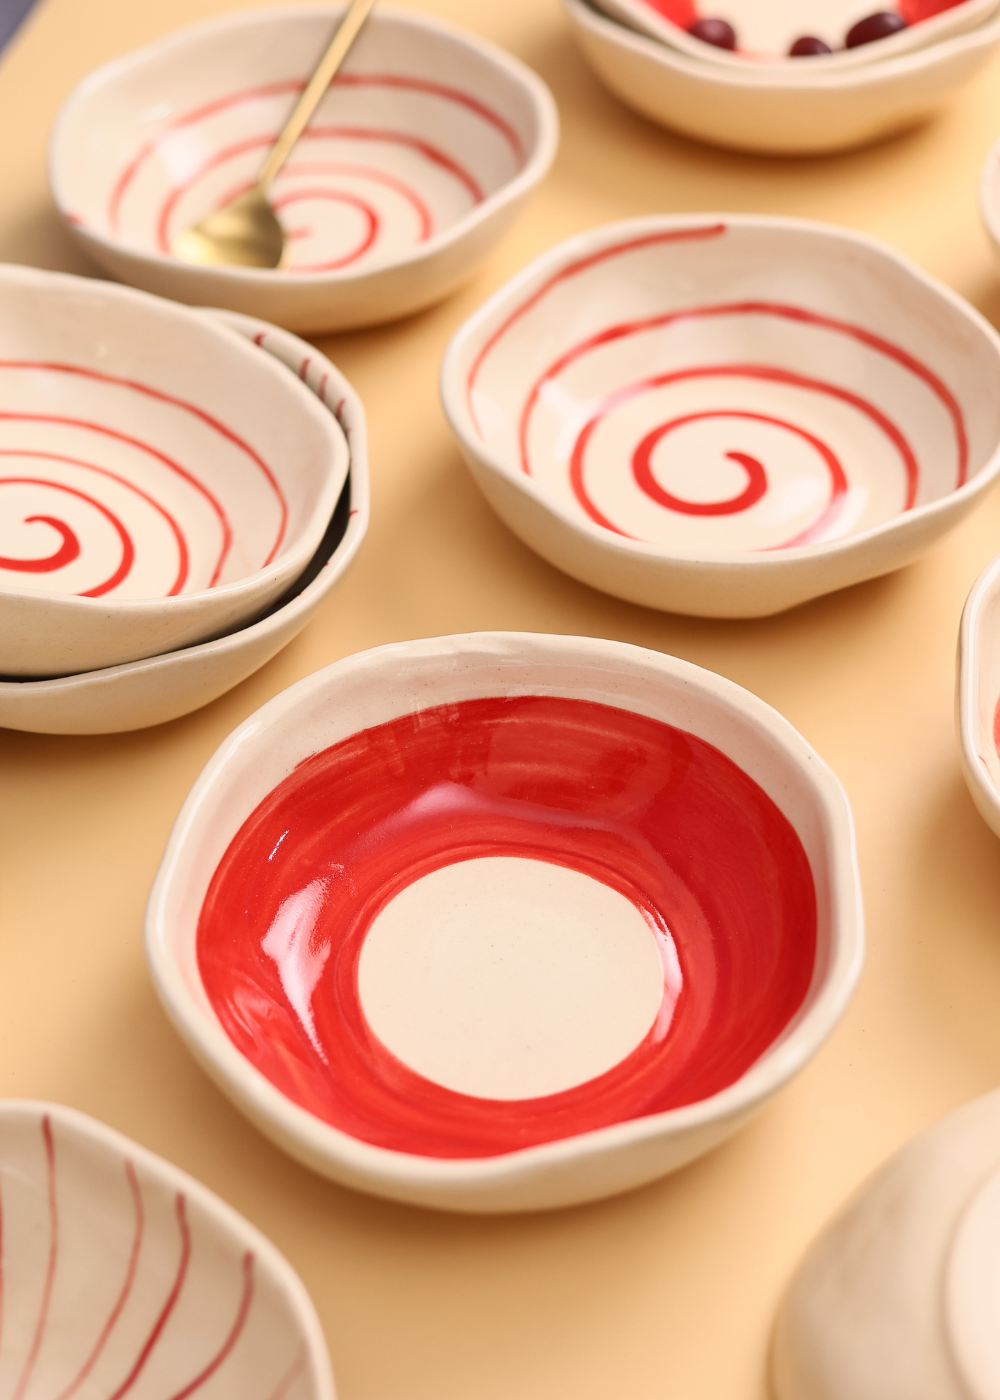 Red and white handmade ceramic bowls